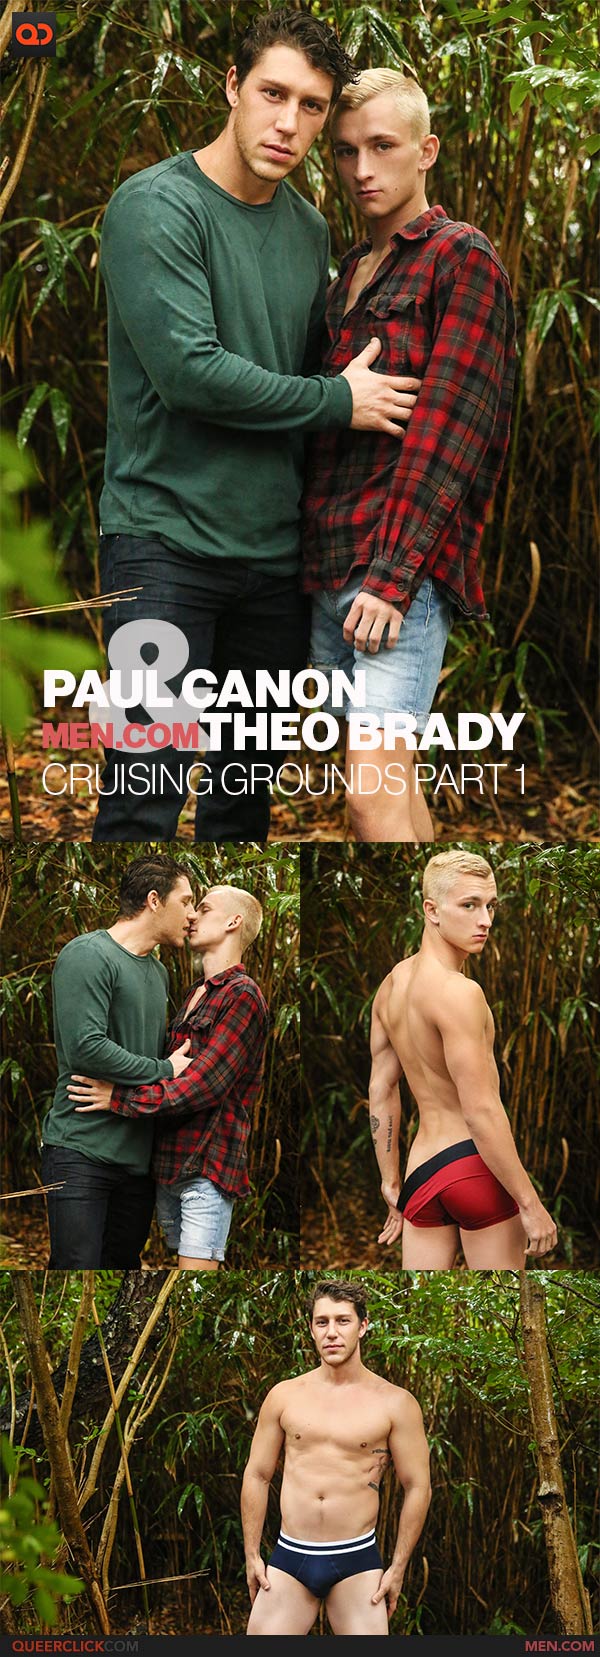 Men.com: Paul Canon and Theo Brady